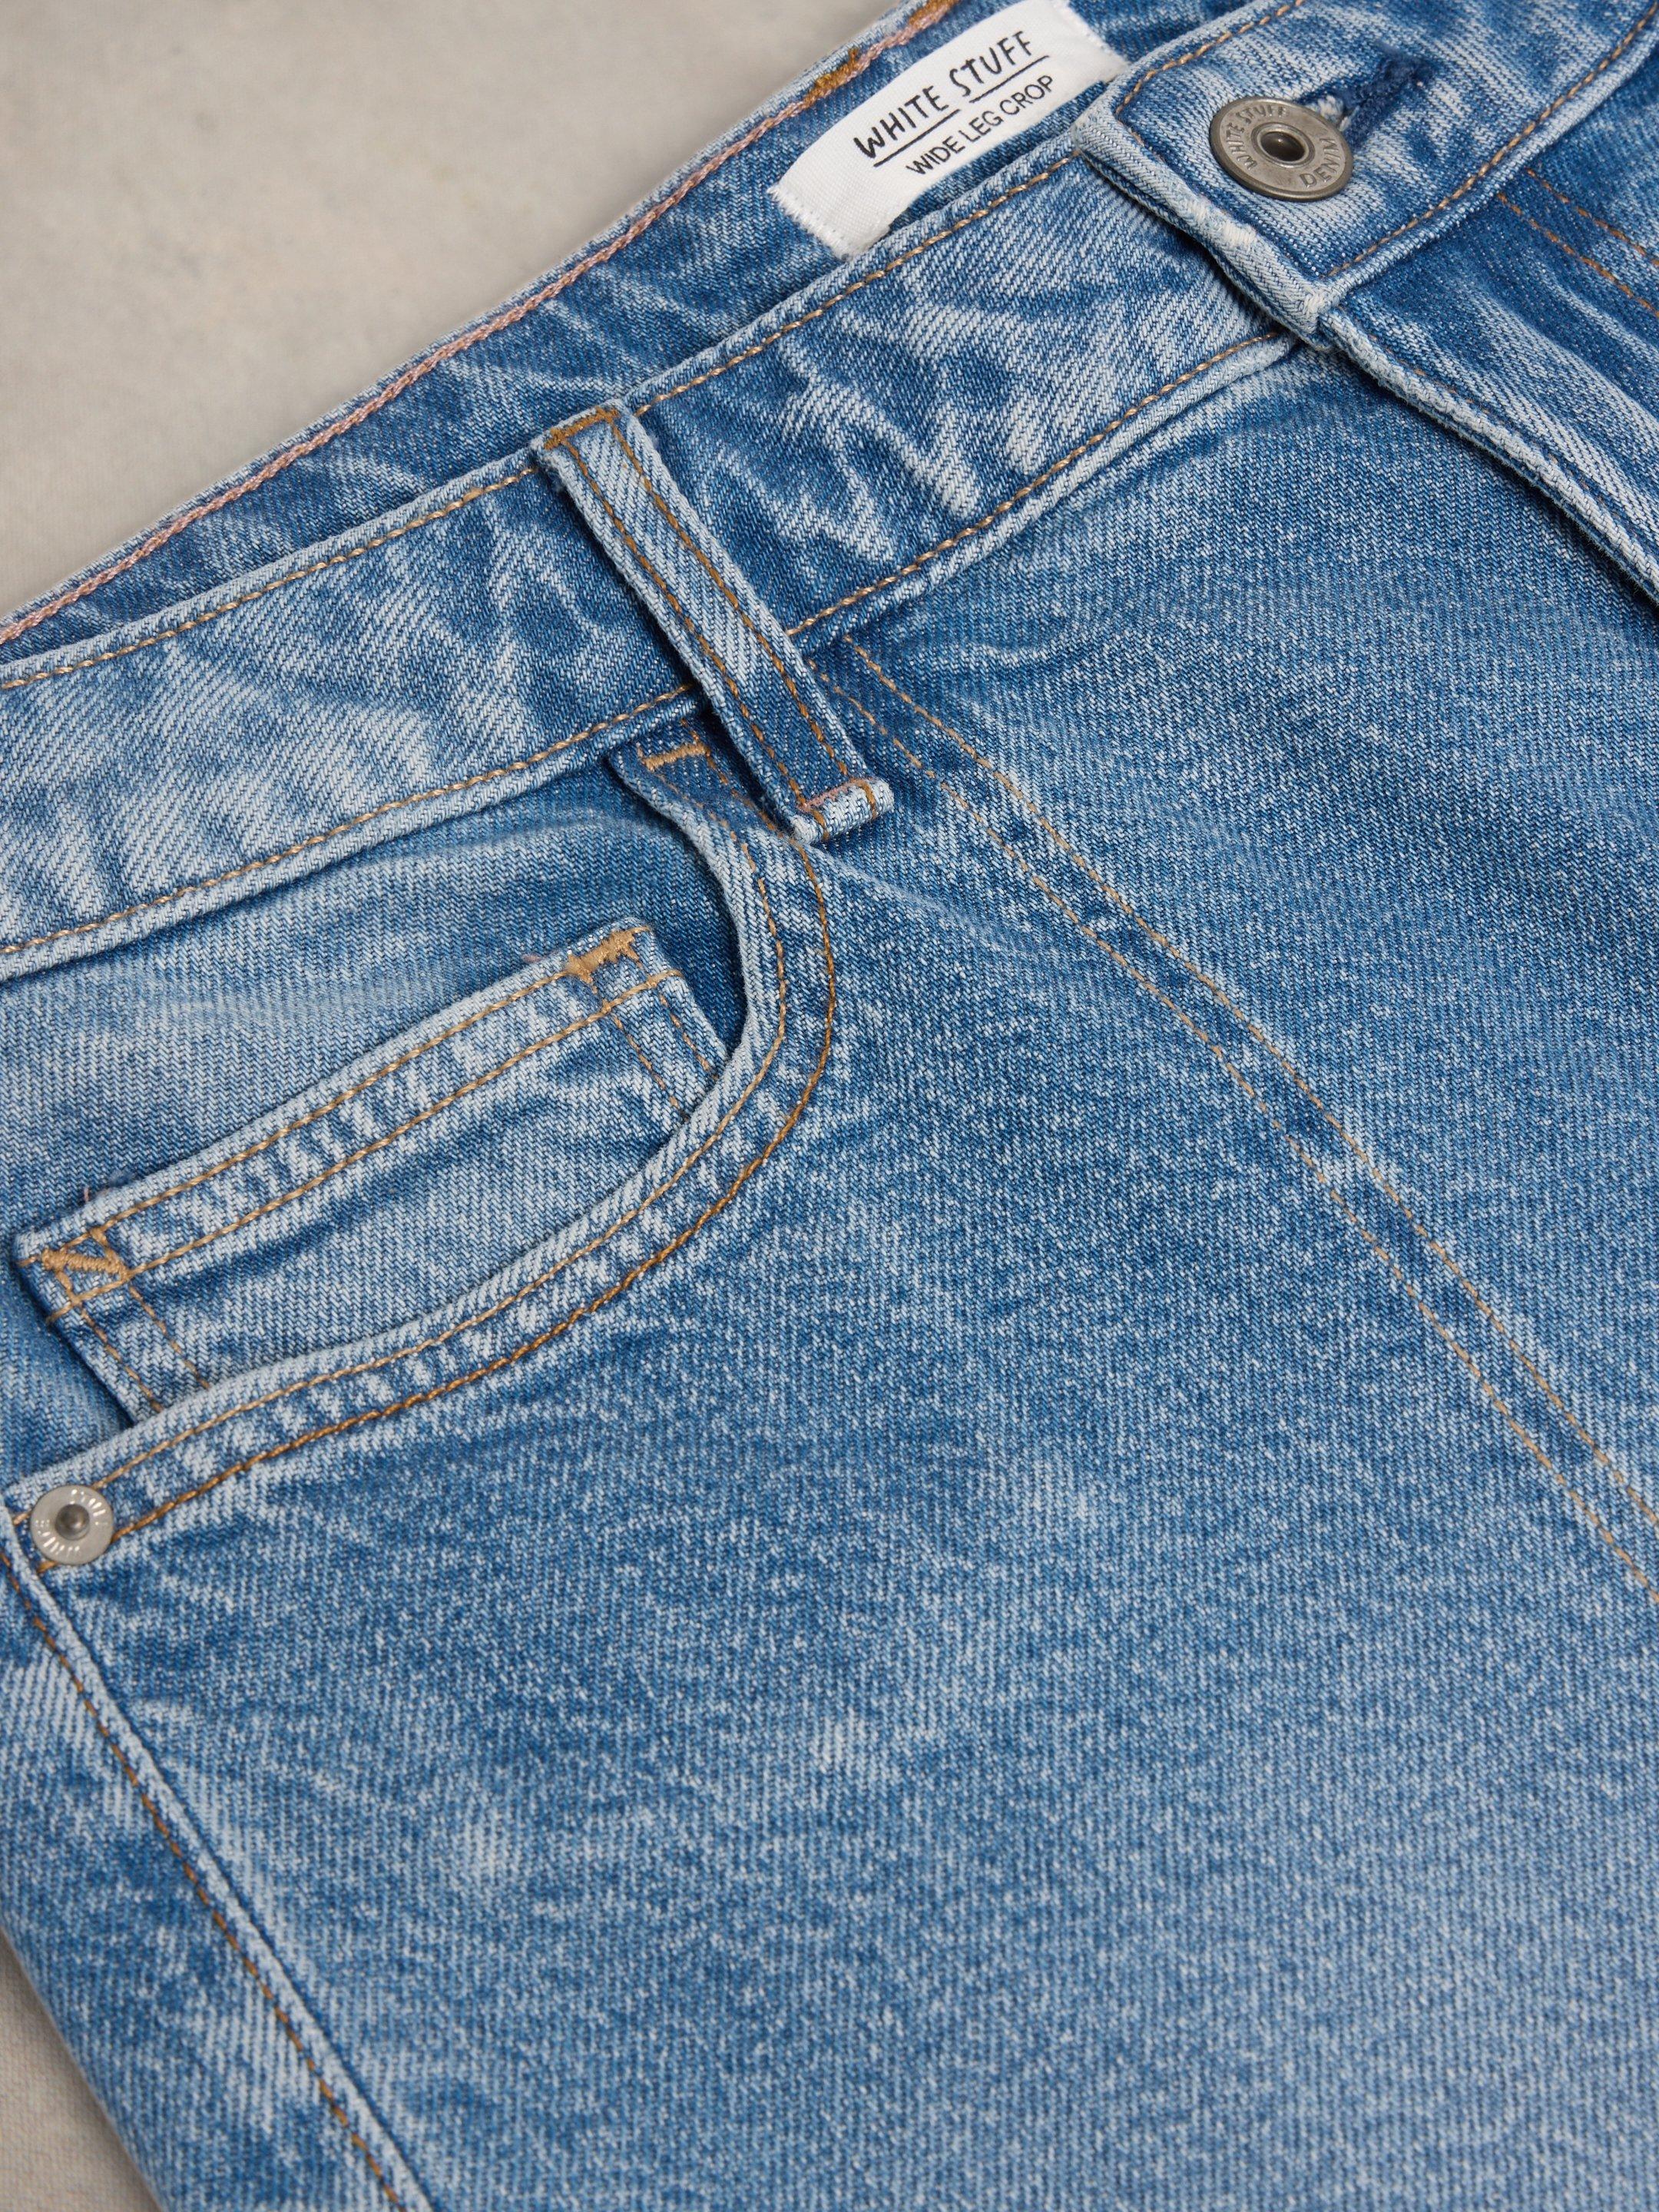 Tia Wide Leg Crop Jean in MID DENIM - FLAT DETAIL